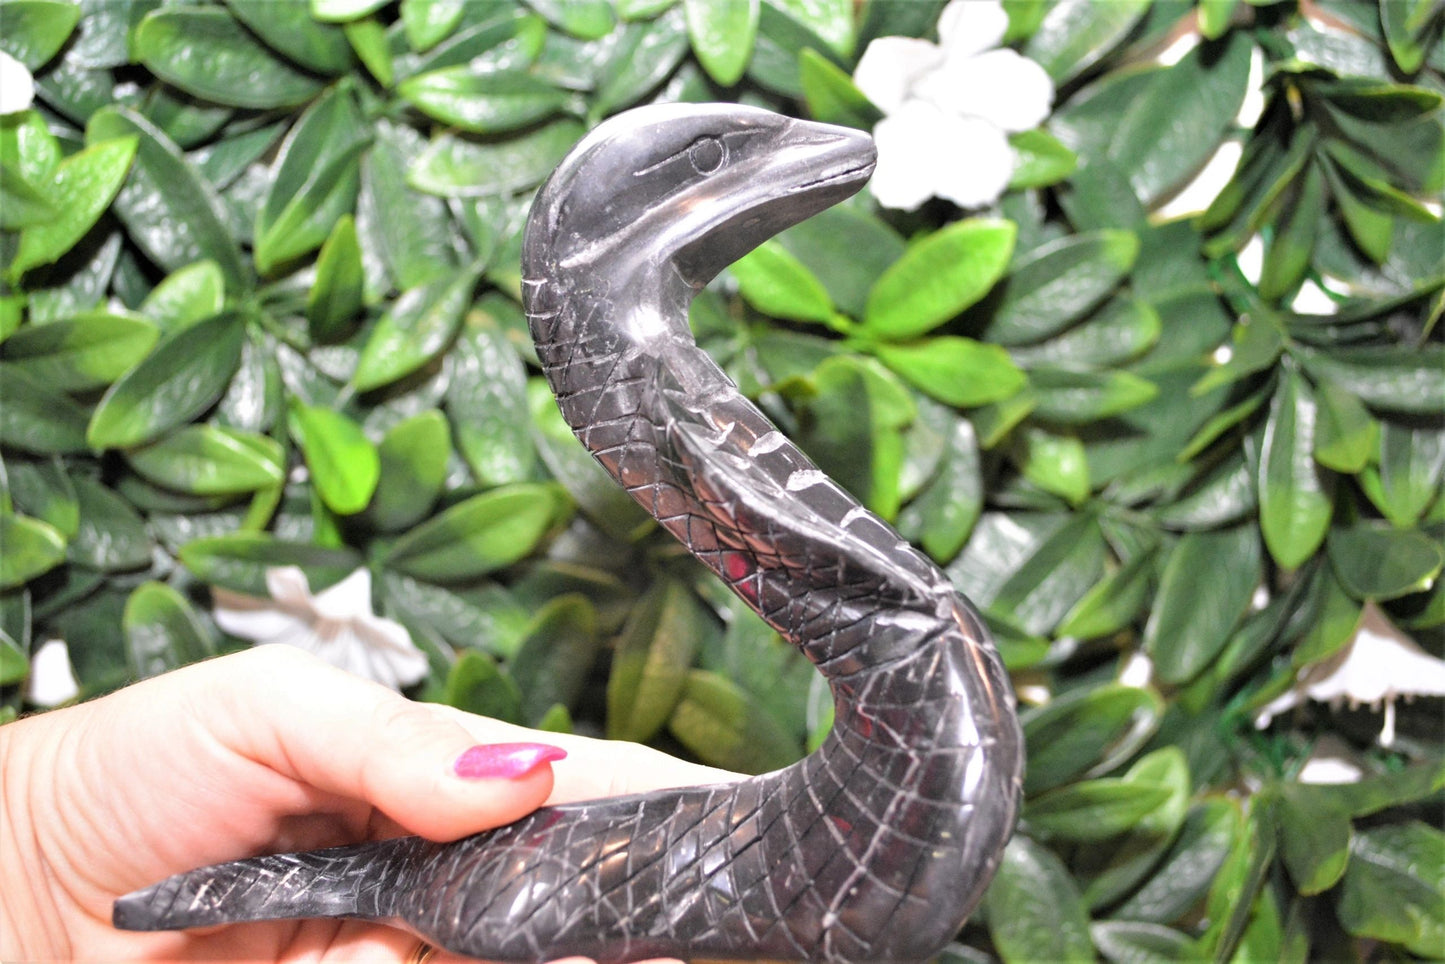 Black Jade Snake